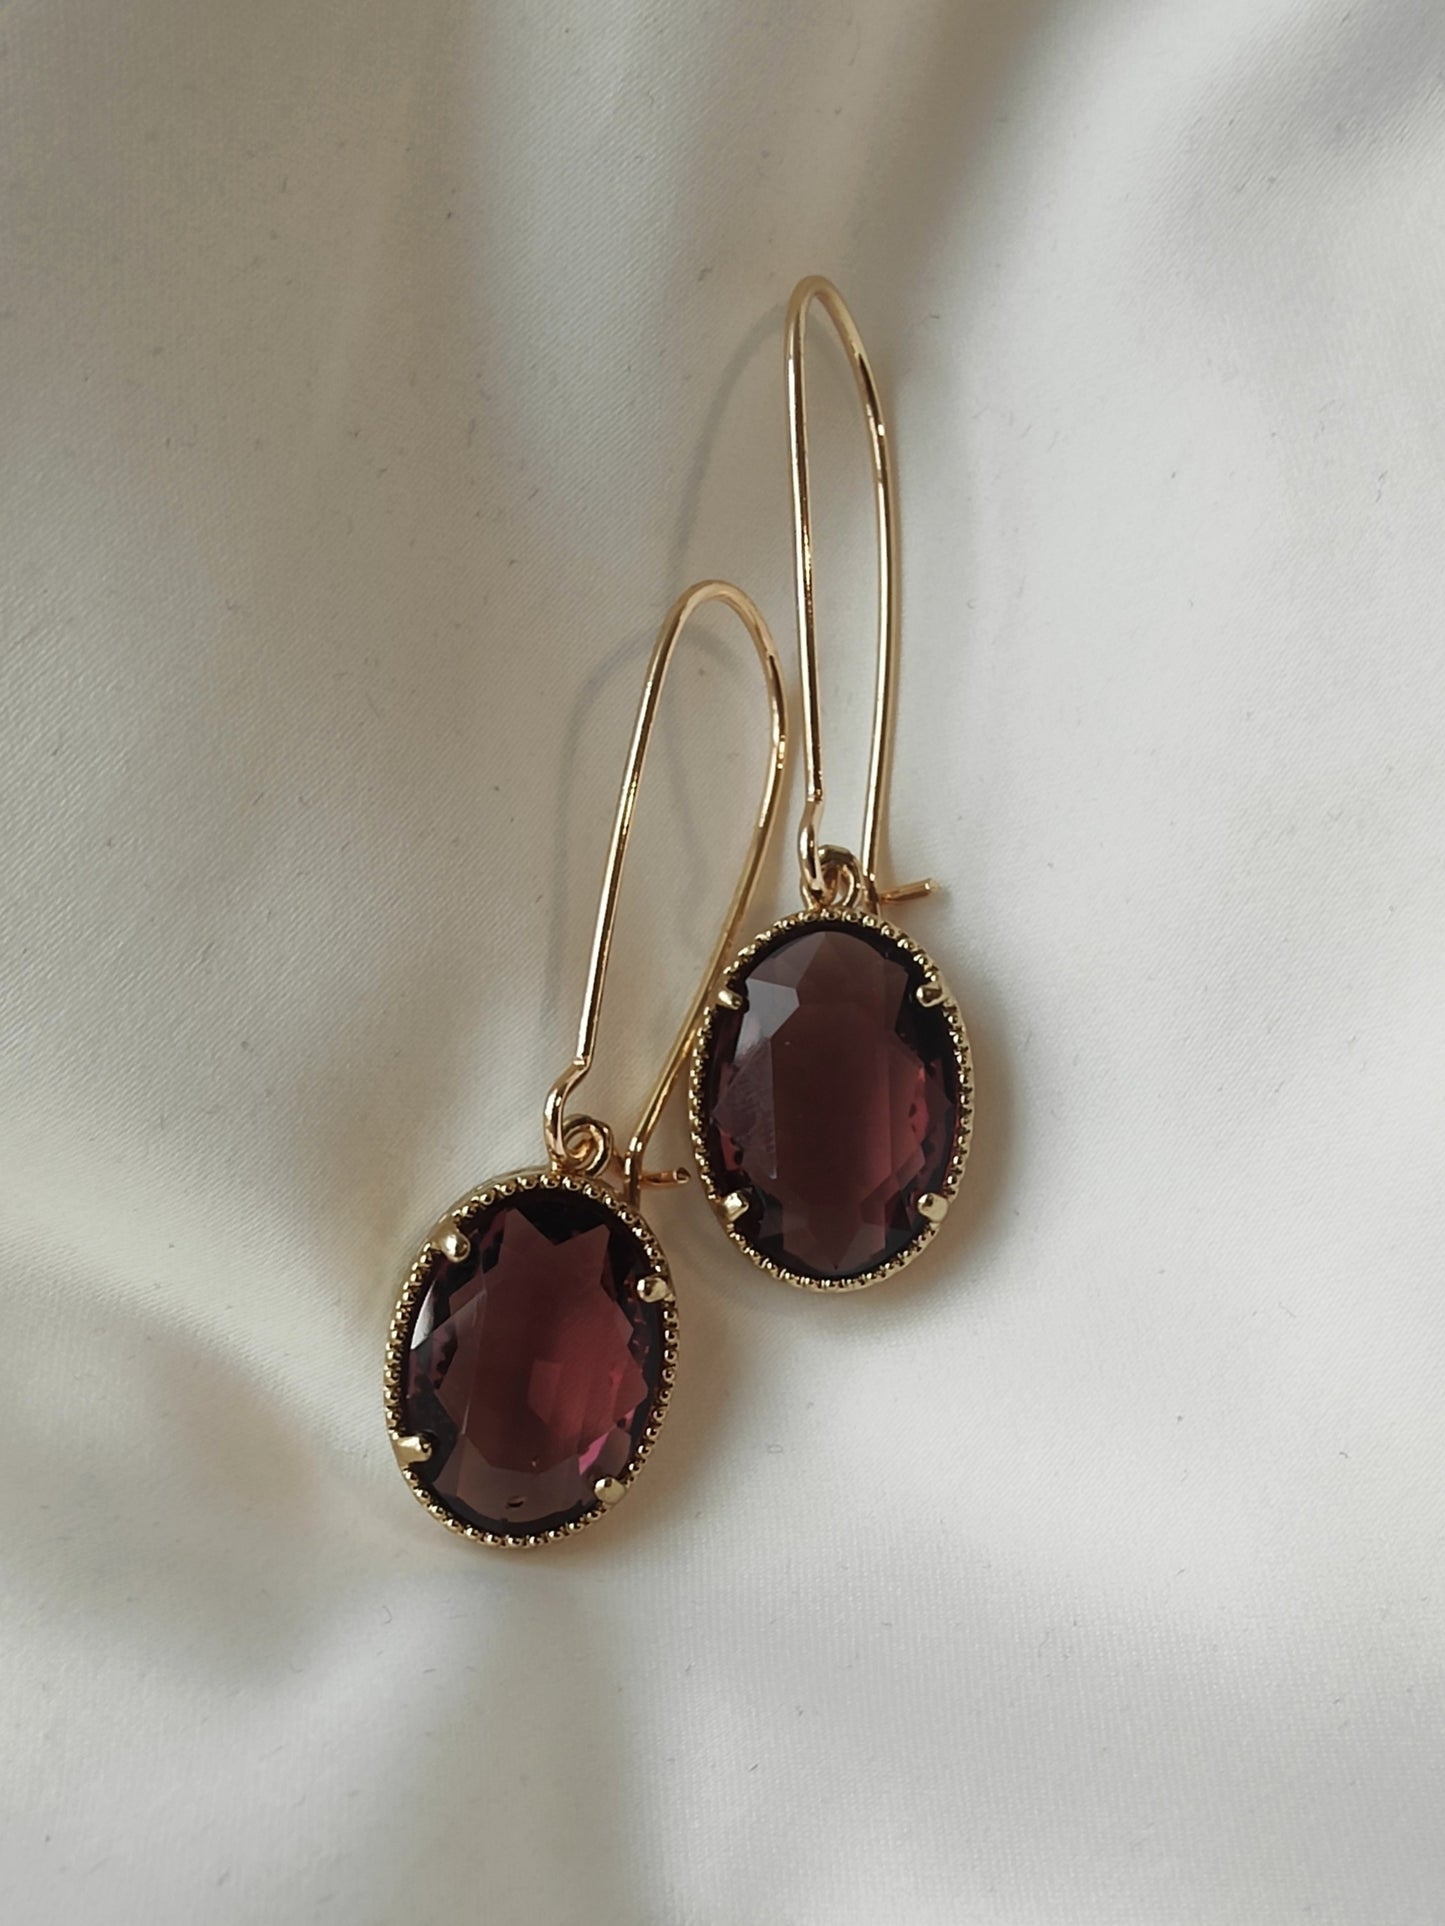 Queen Crystal Earrings - Grape